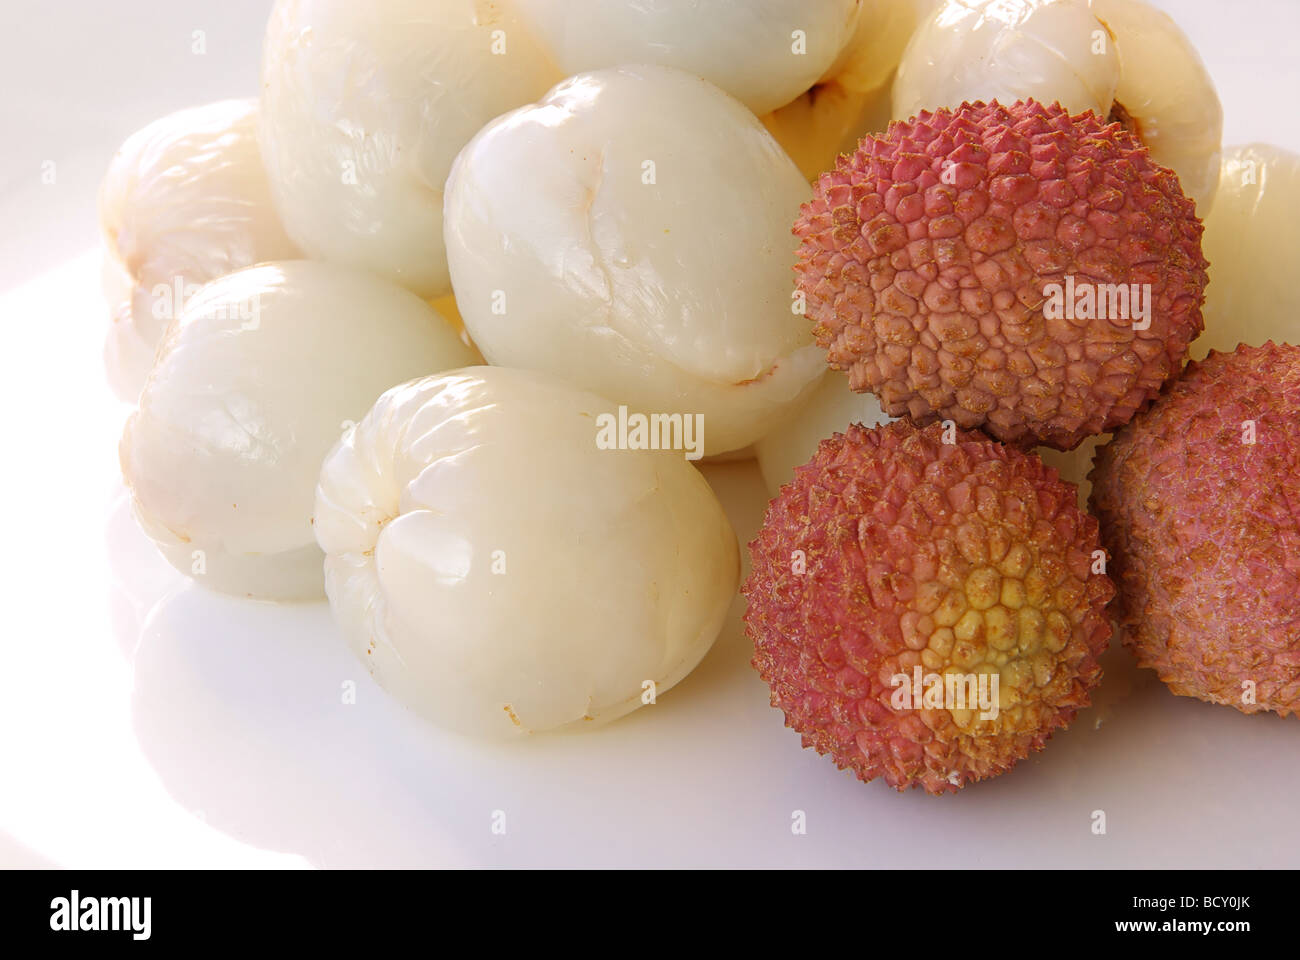 Litschi obst frucht litsch lychee litschie chinesische eat hi-res stock  photography and images - Alamy